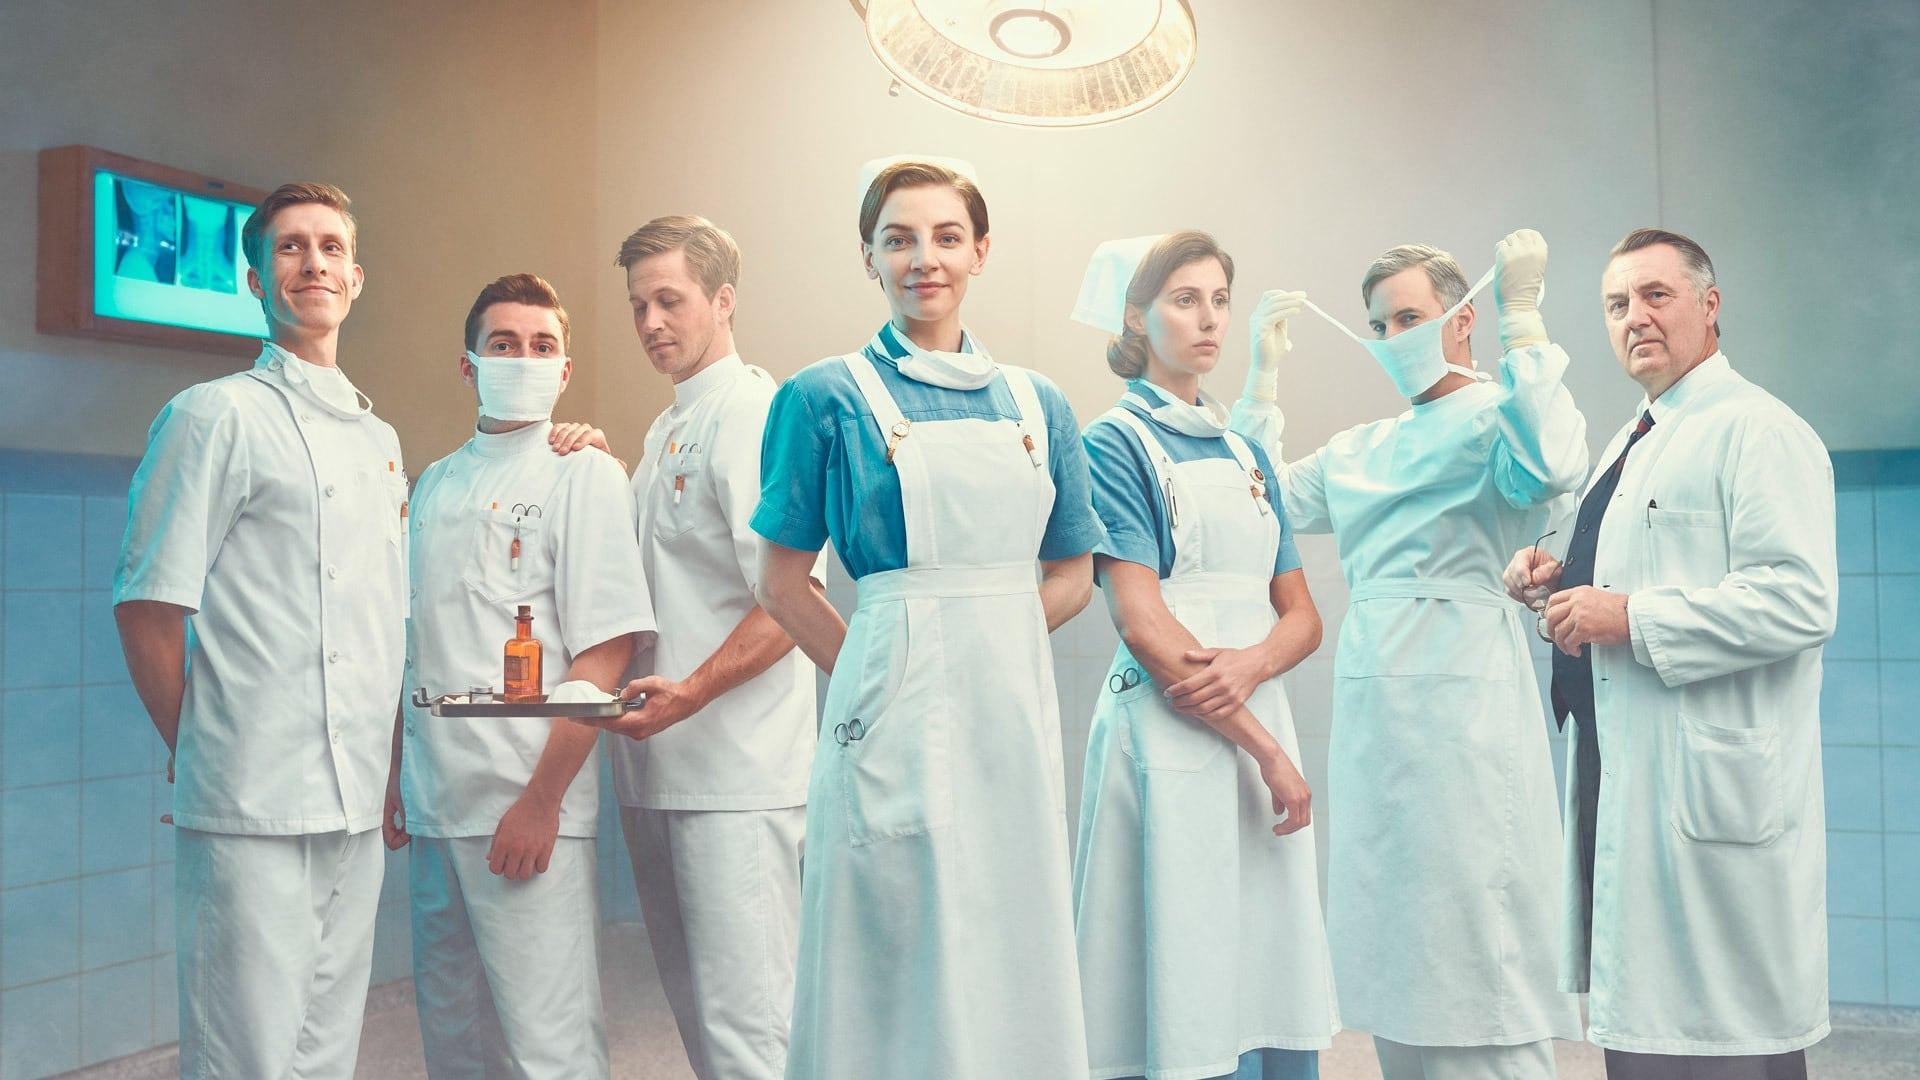 The New Nurses backdrop